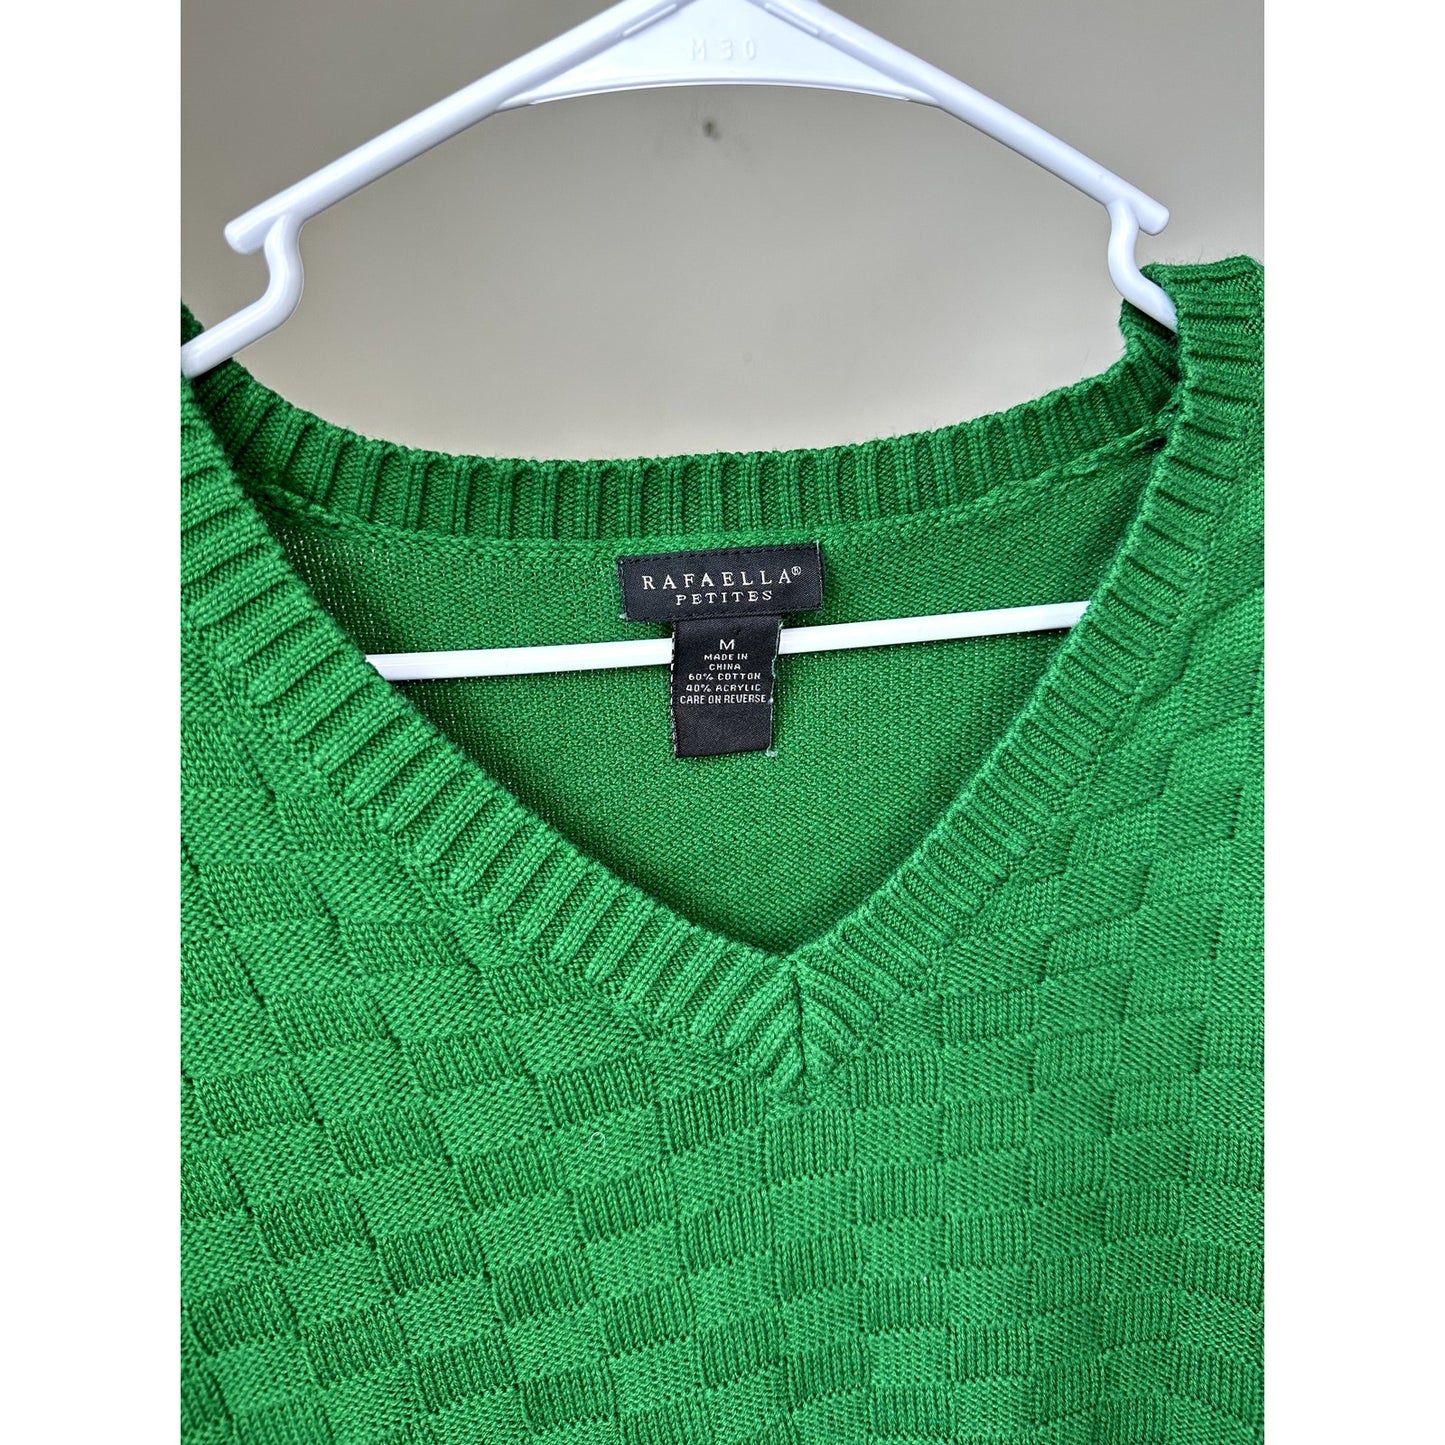 Rafaella Petites Checkered Sweater, Size M (petite)